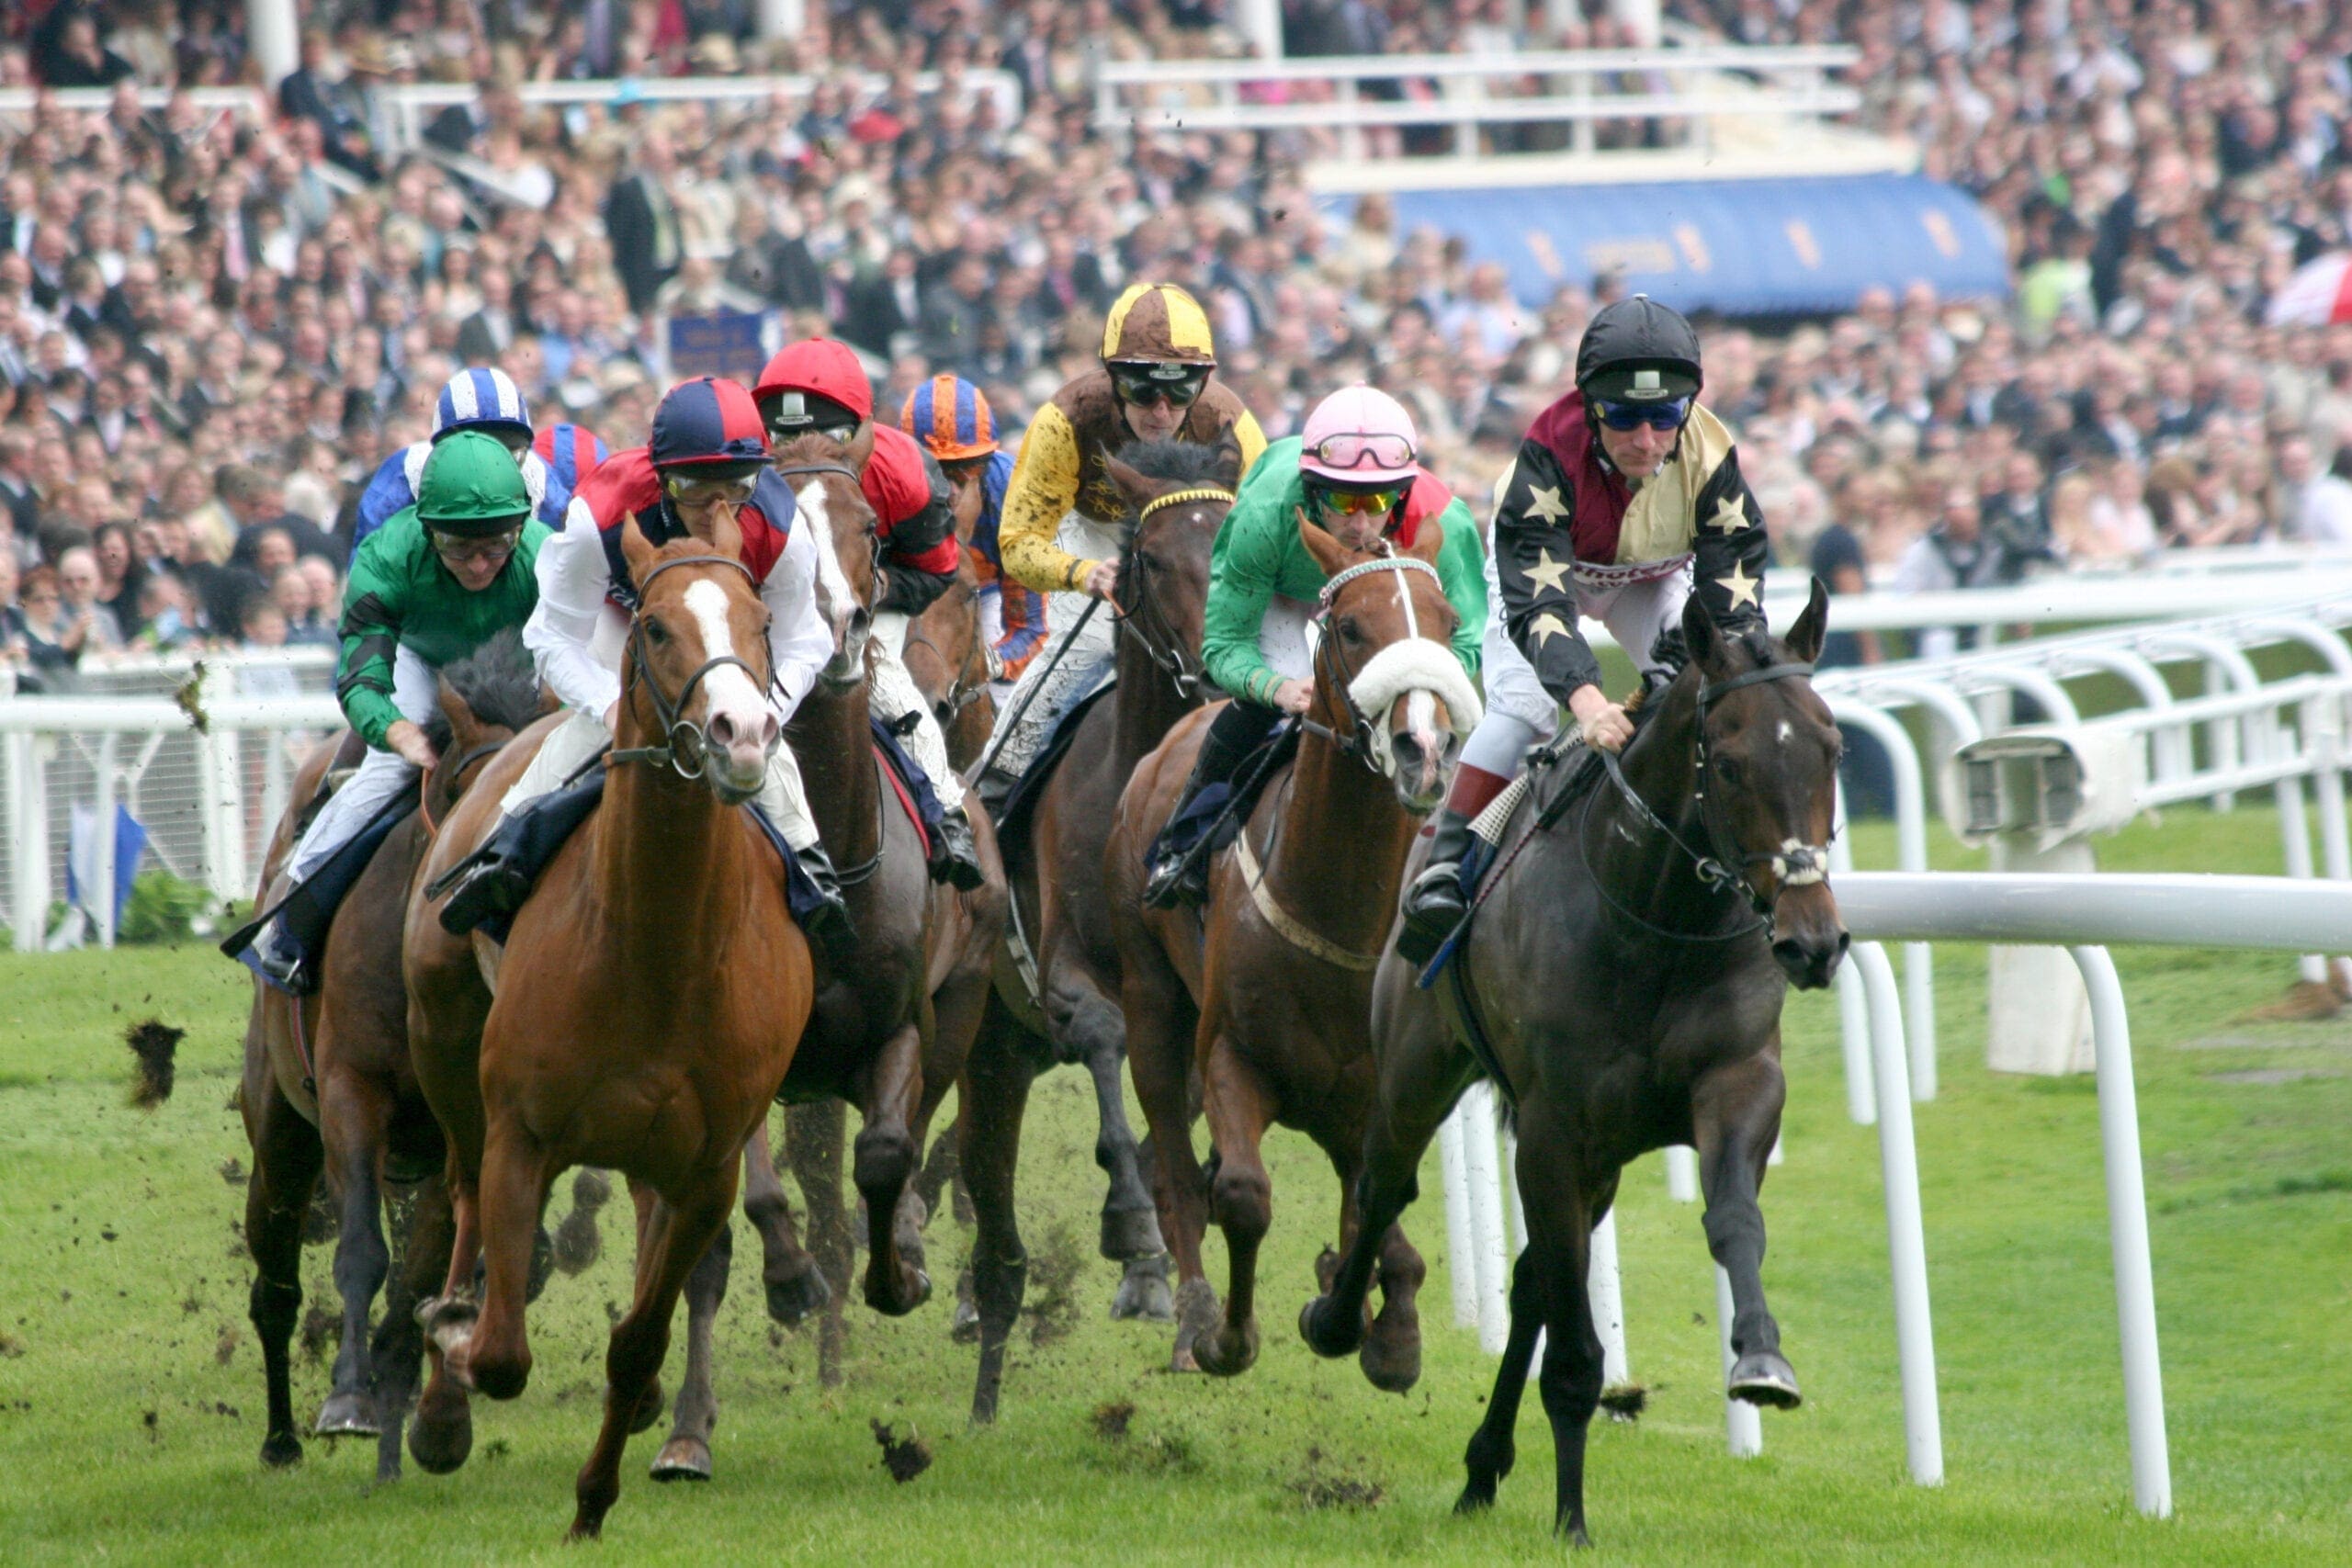 Jockeys racing on horses